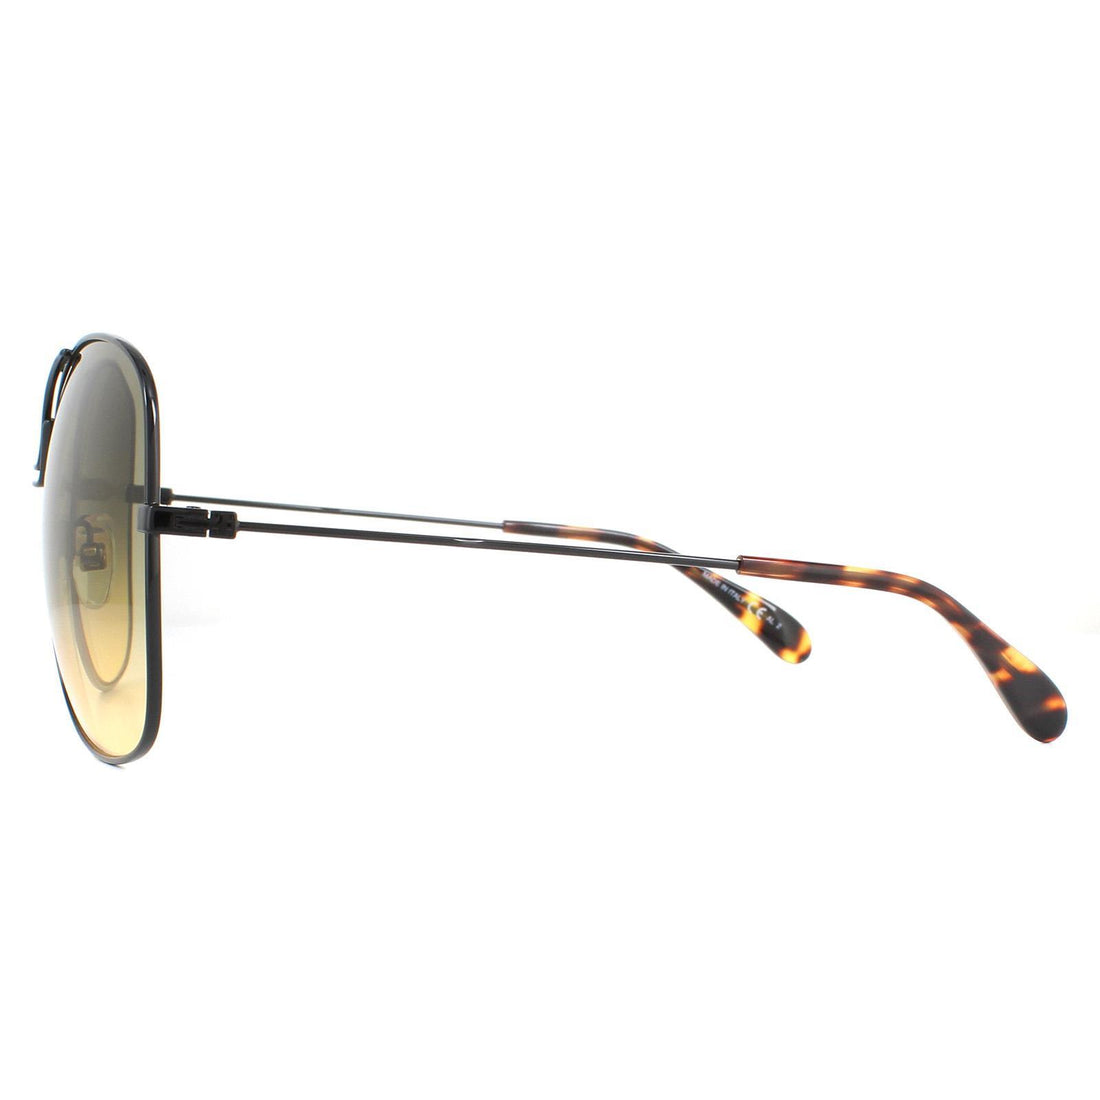 Givenchy GV7144/S Sunglasses